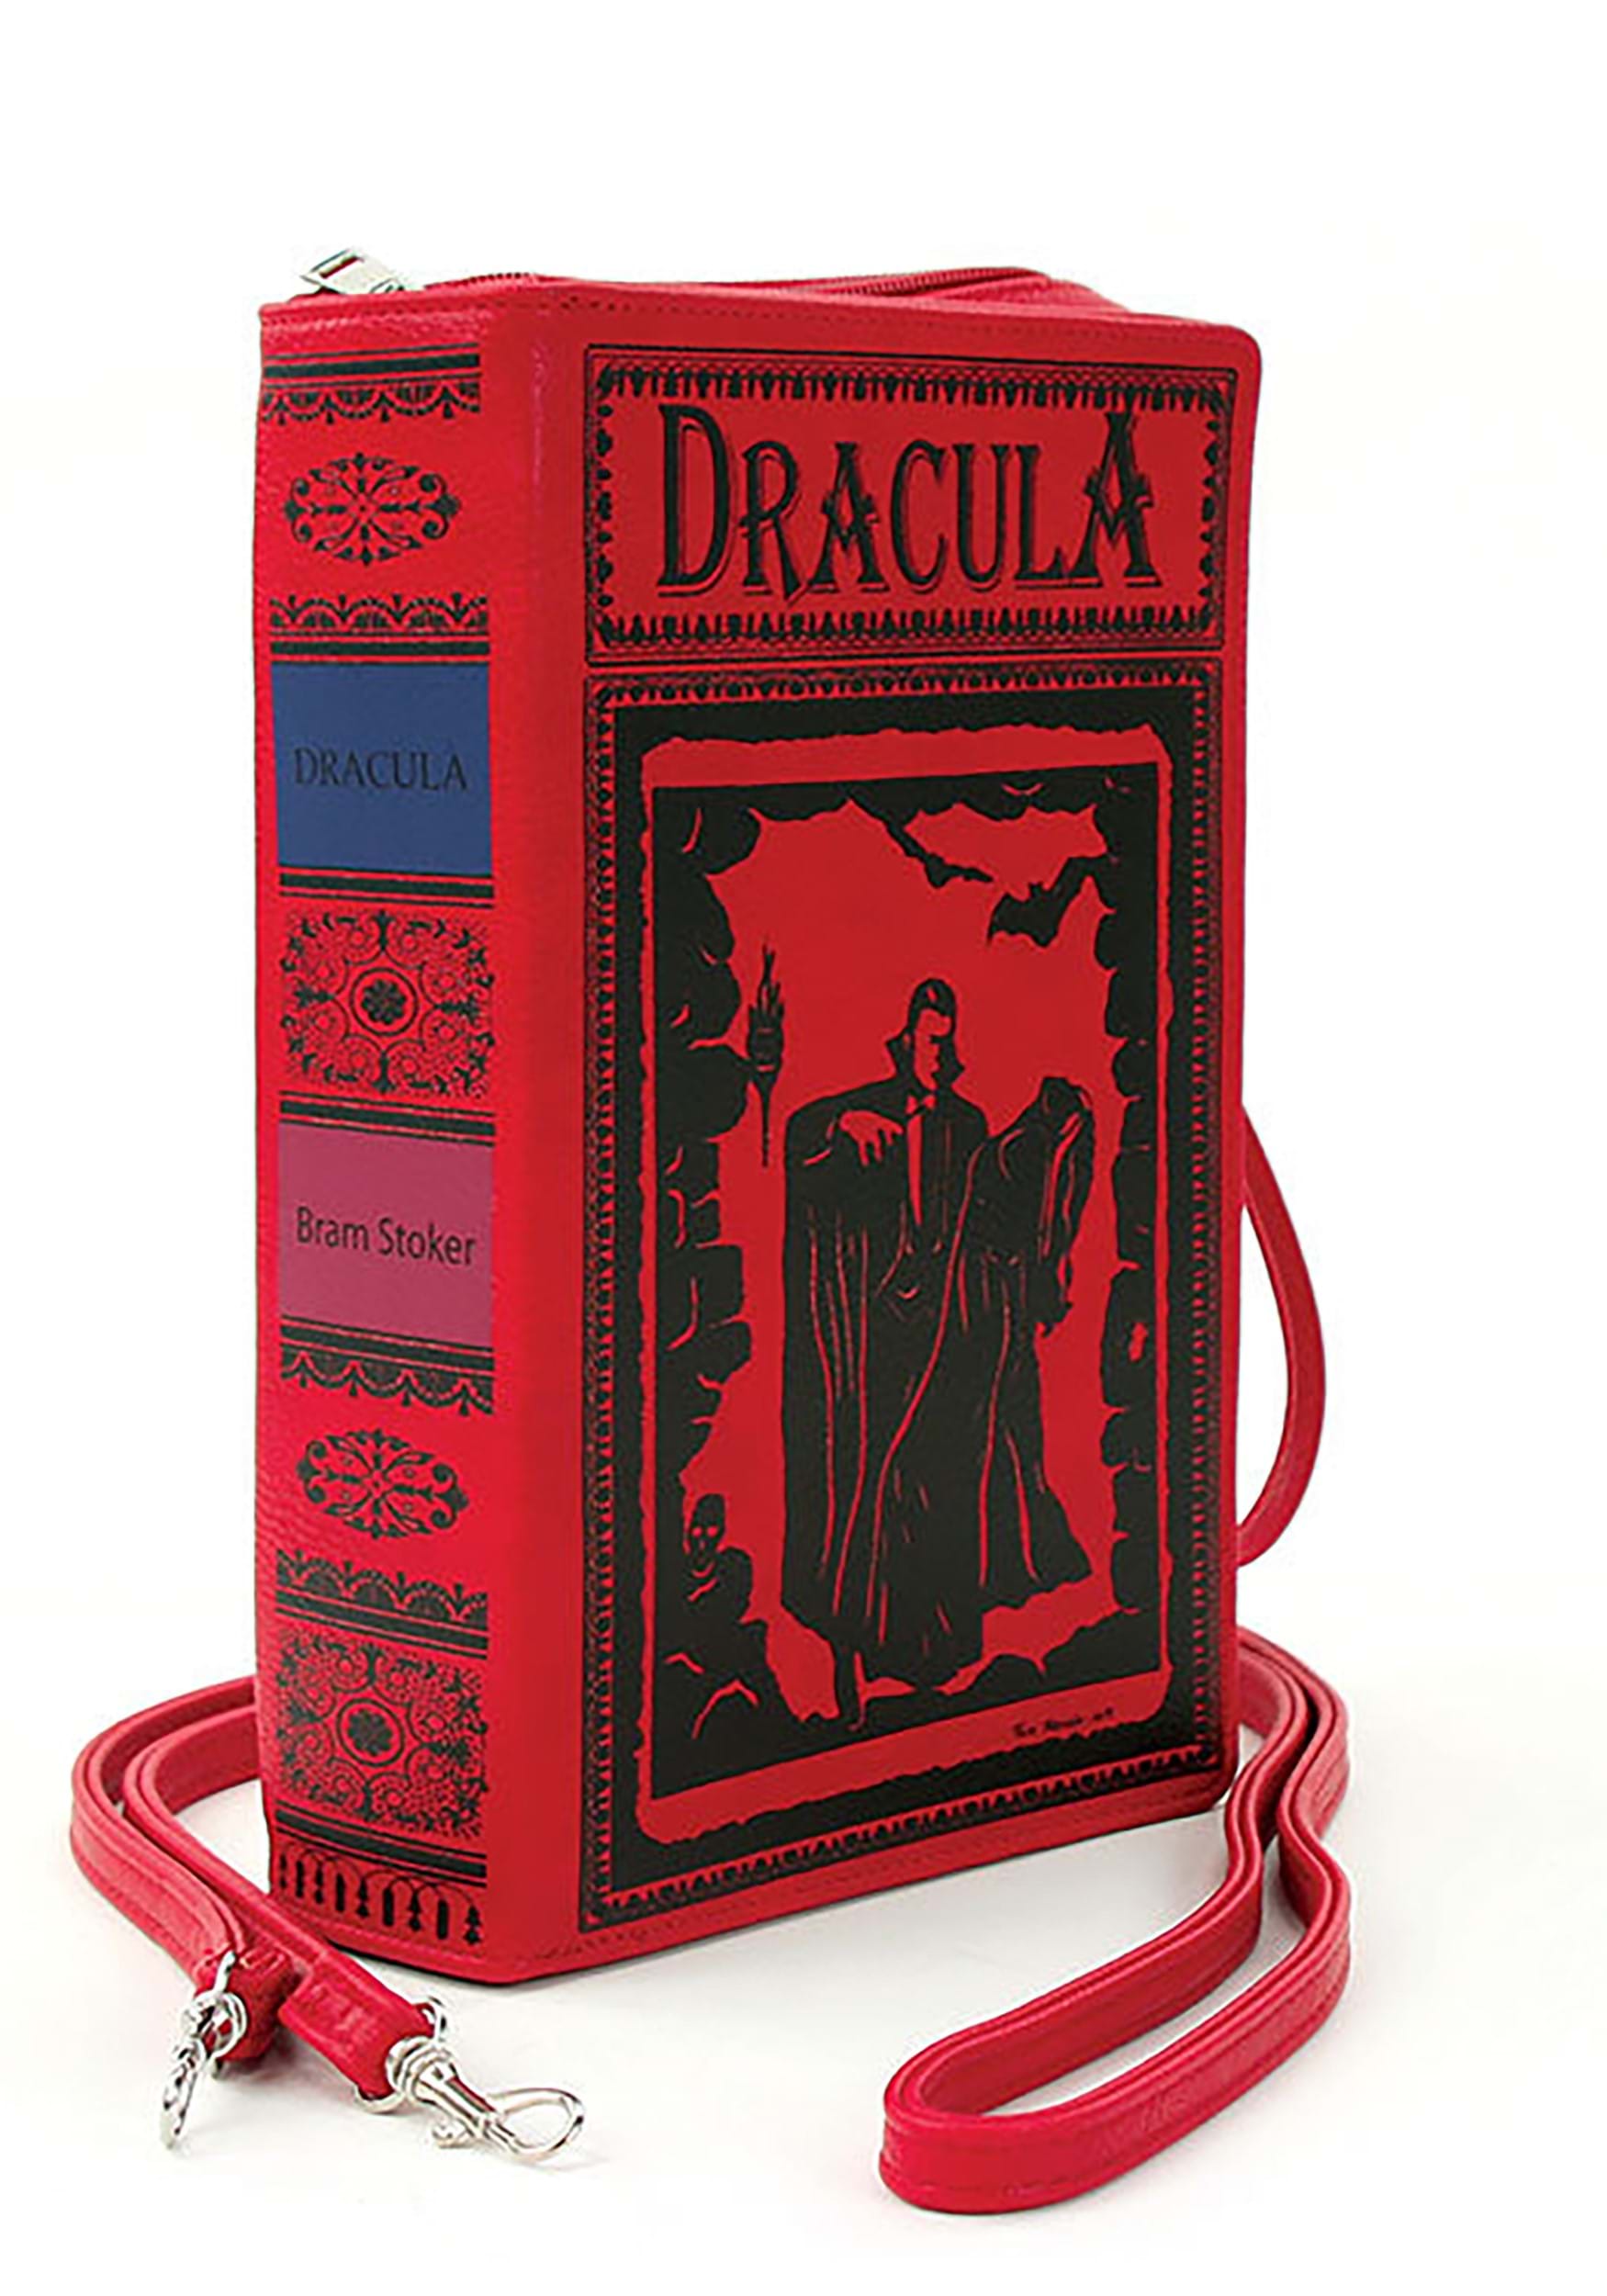 Red Dracula Novel Purse